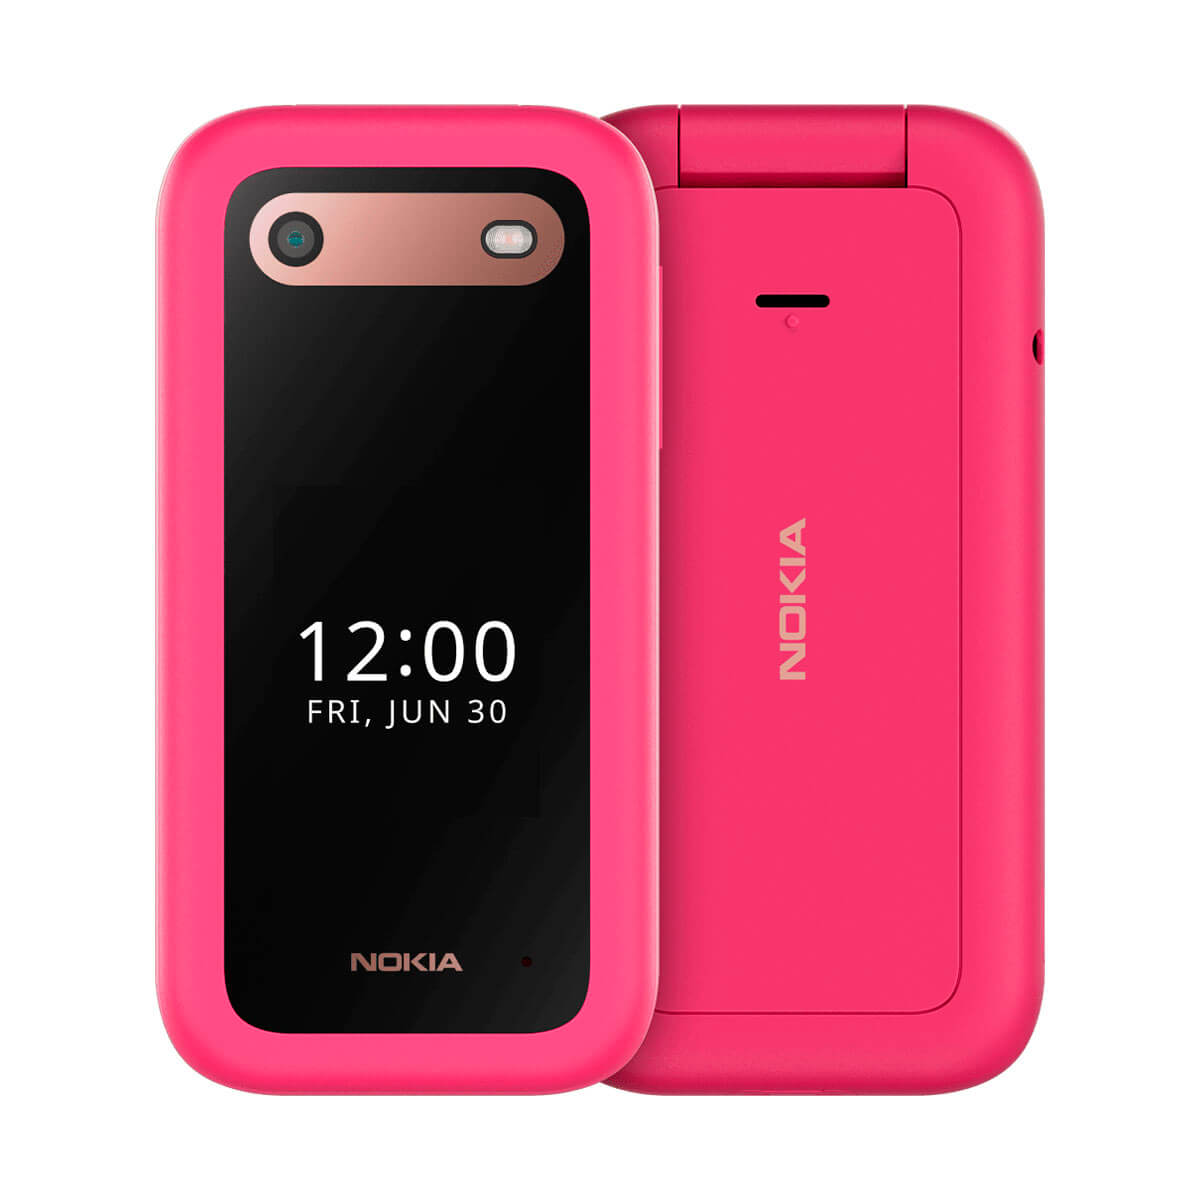 NOKIA 2660 FLIP 4G ROSA (POP PINK) DUAL SIM | Mviles libres